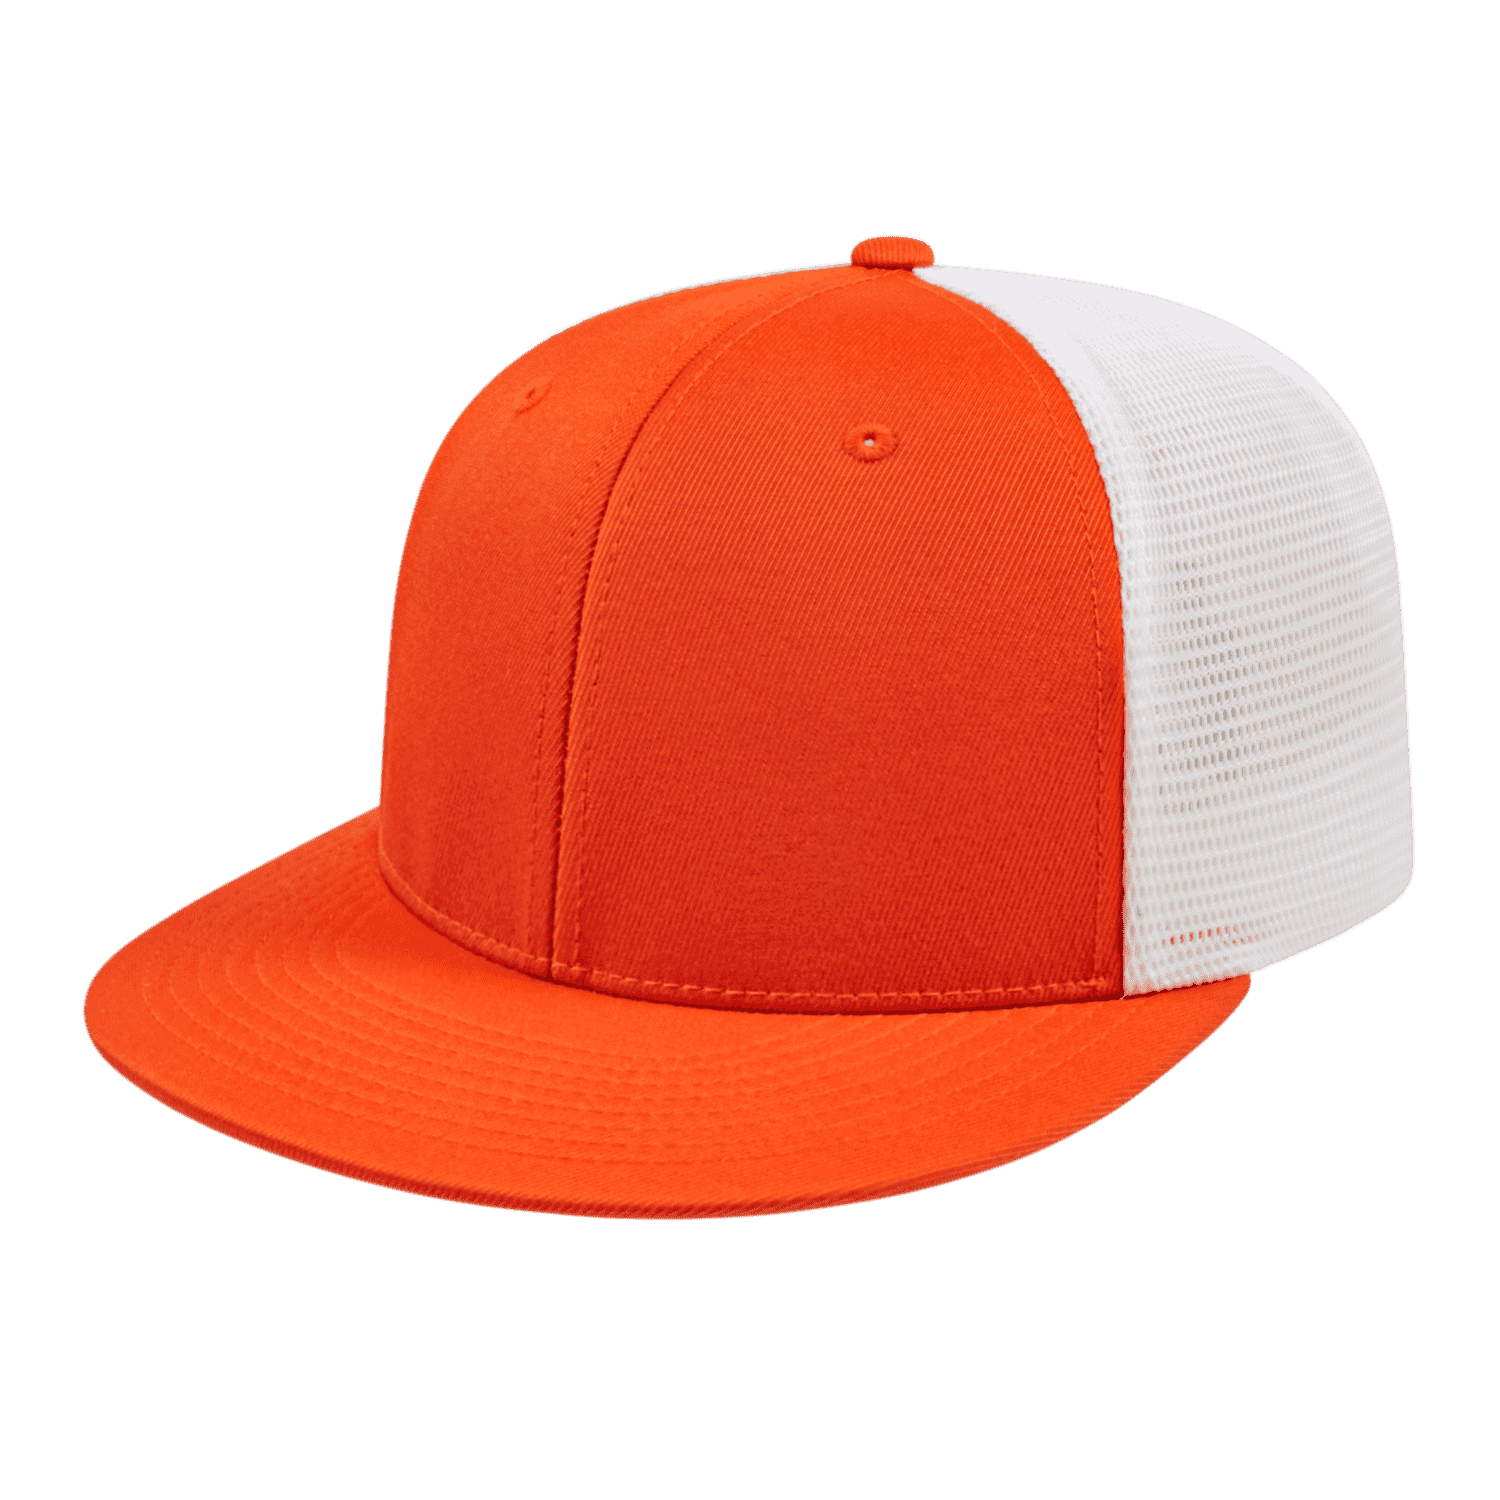 Cap America i8501 Flexfit Performance Trucker Mesh Back Cap - Orange W